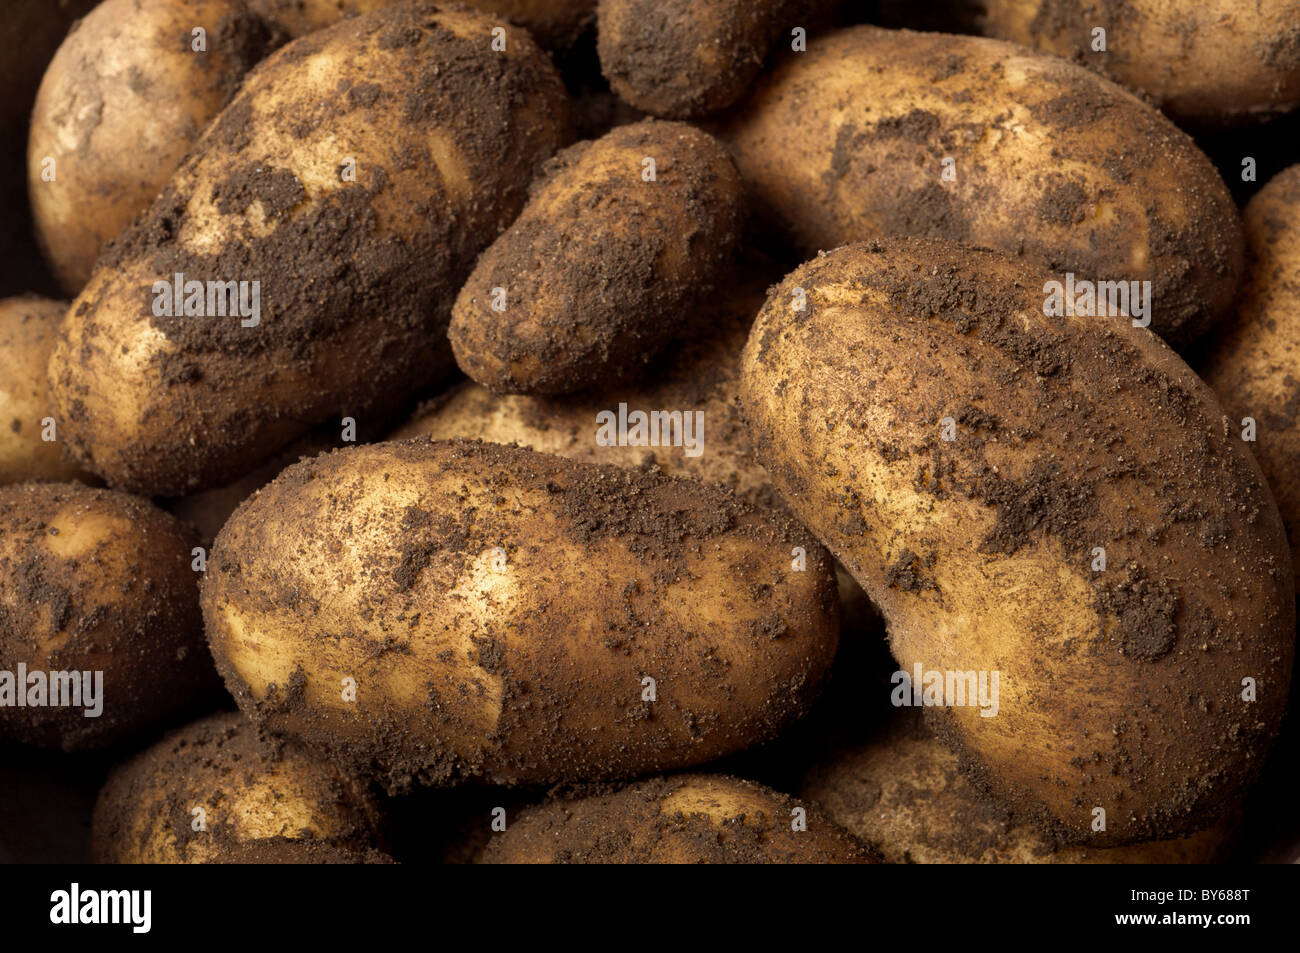 New potatoes UK Stock Photo